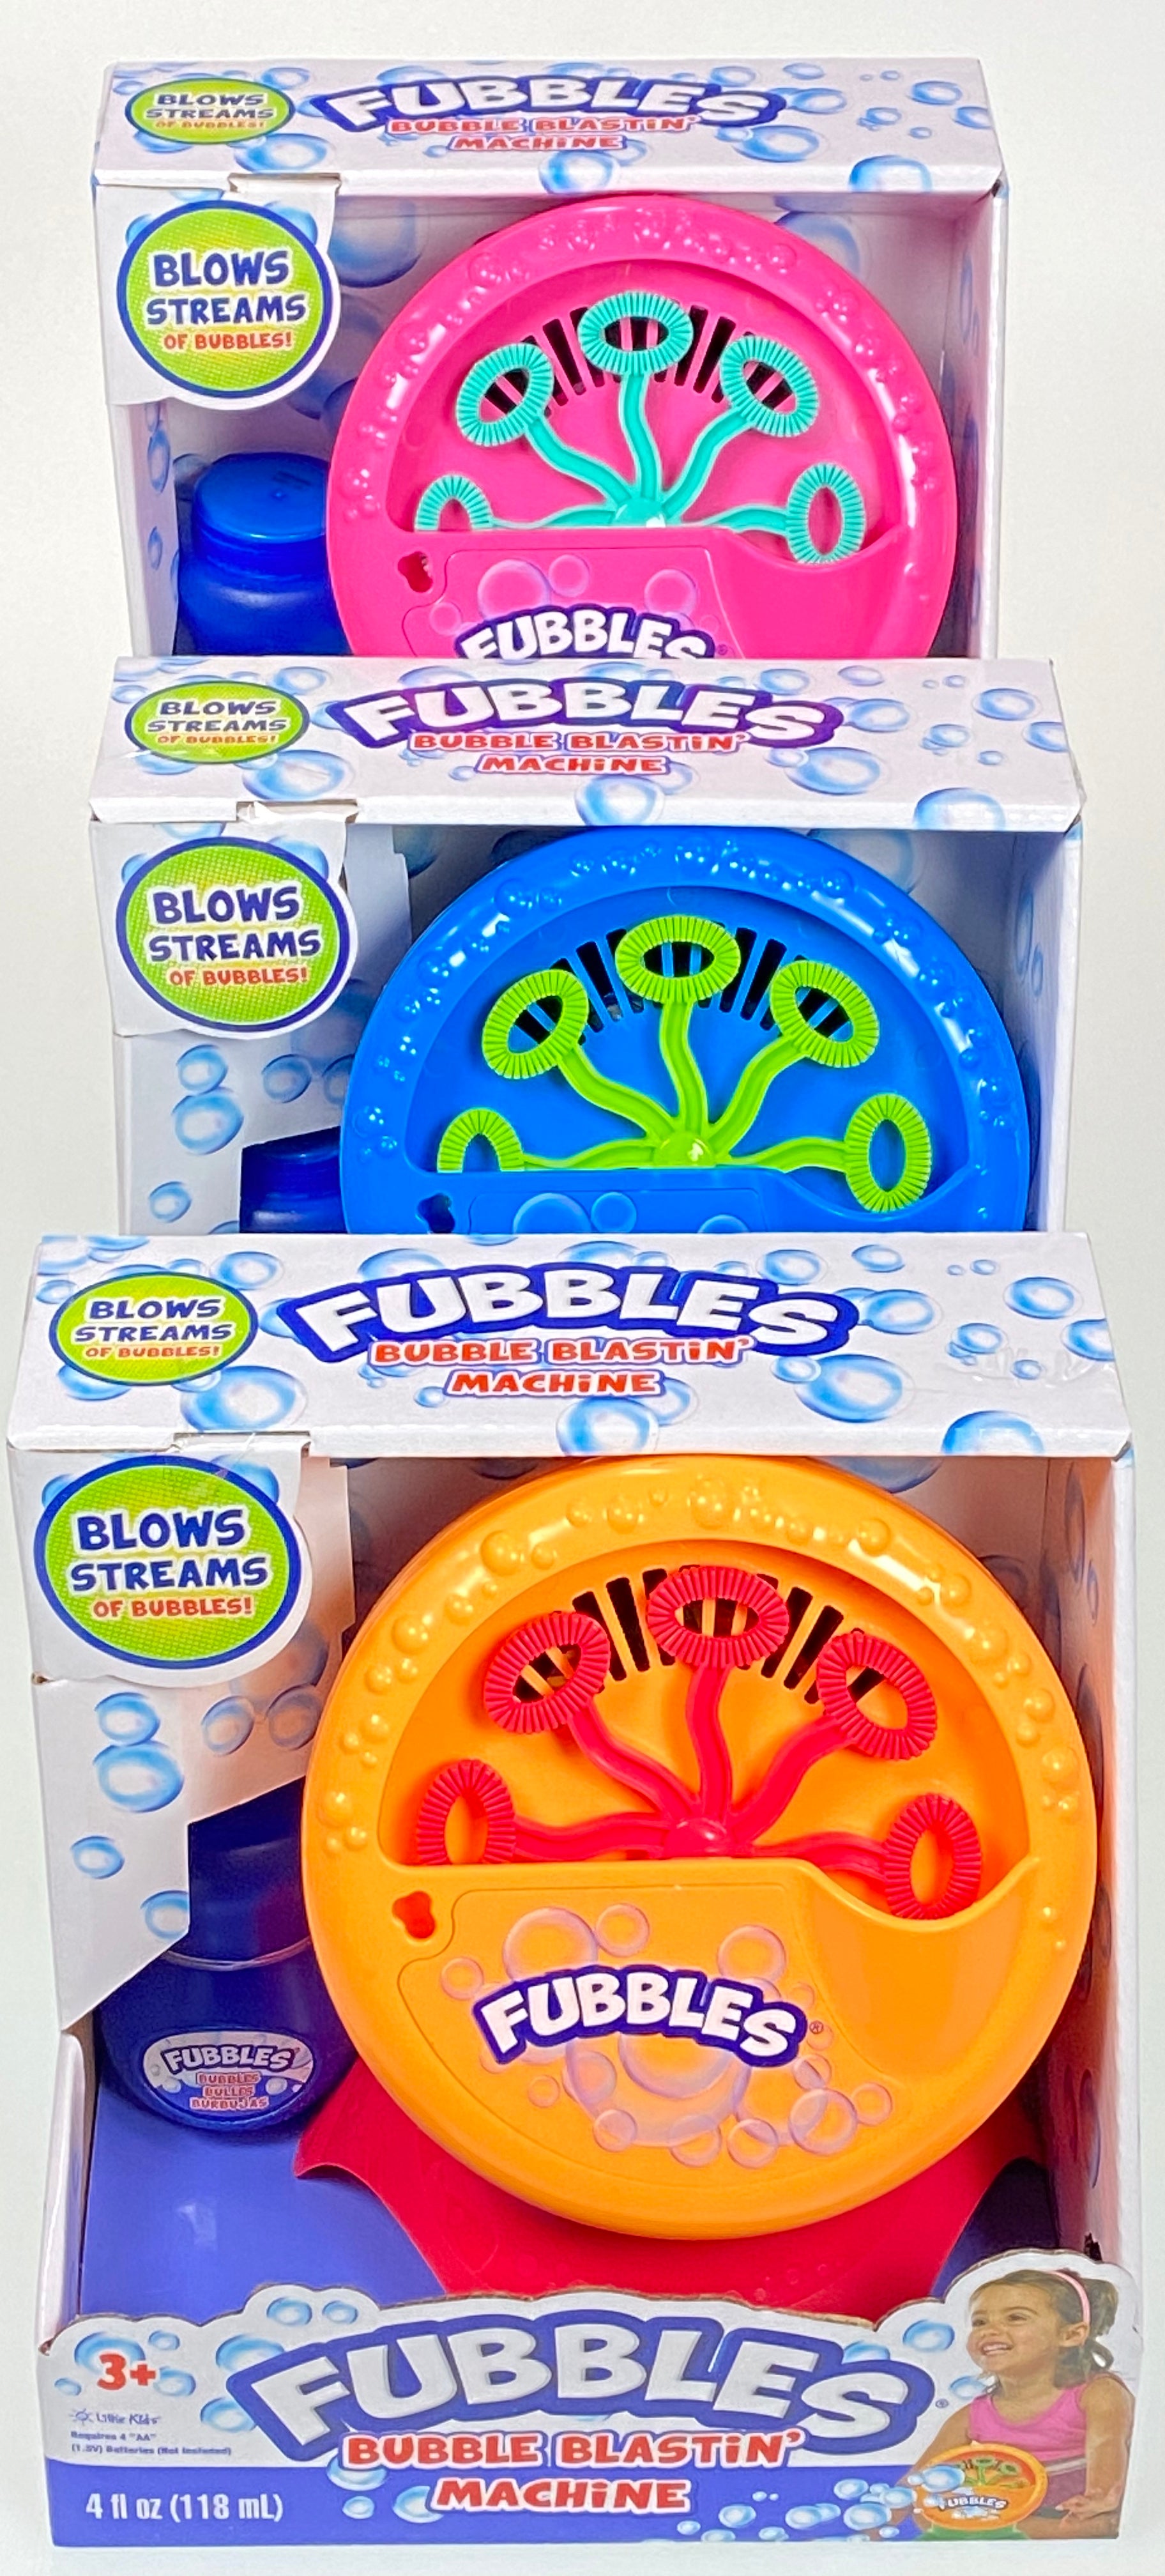 Fubbles Bubble Blasting Machine    